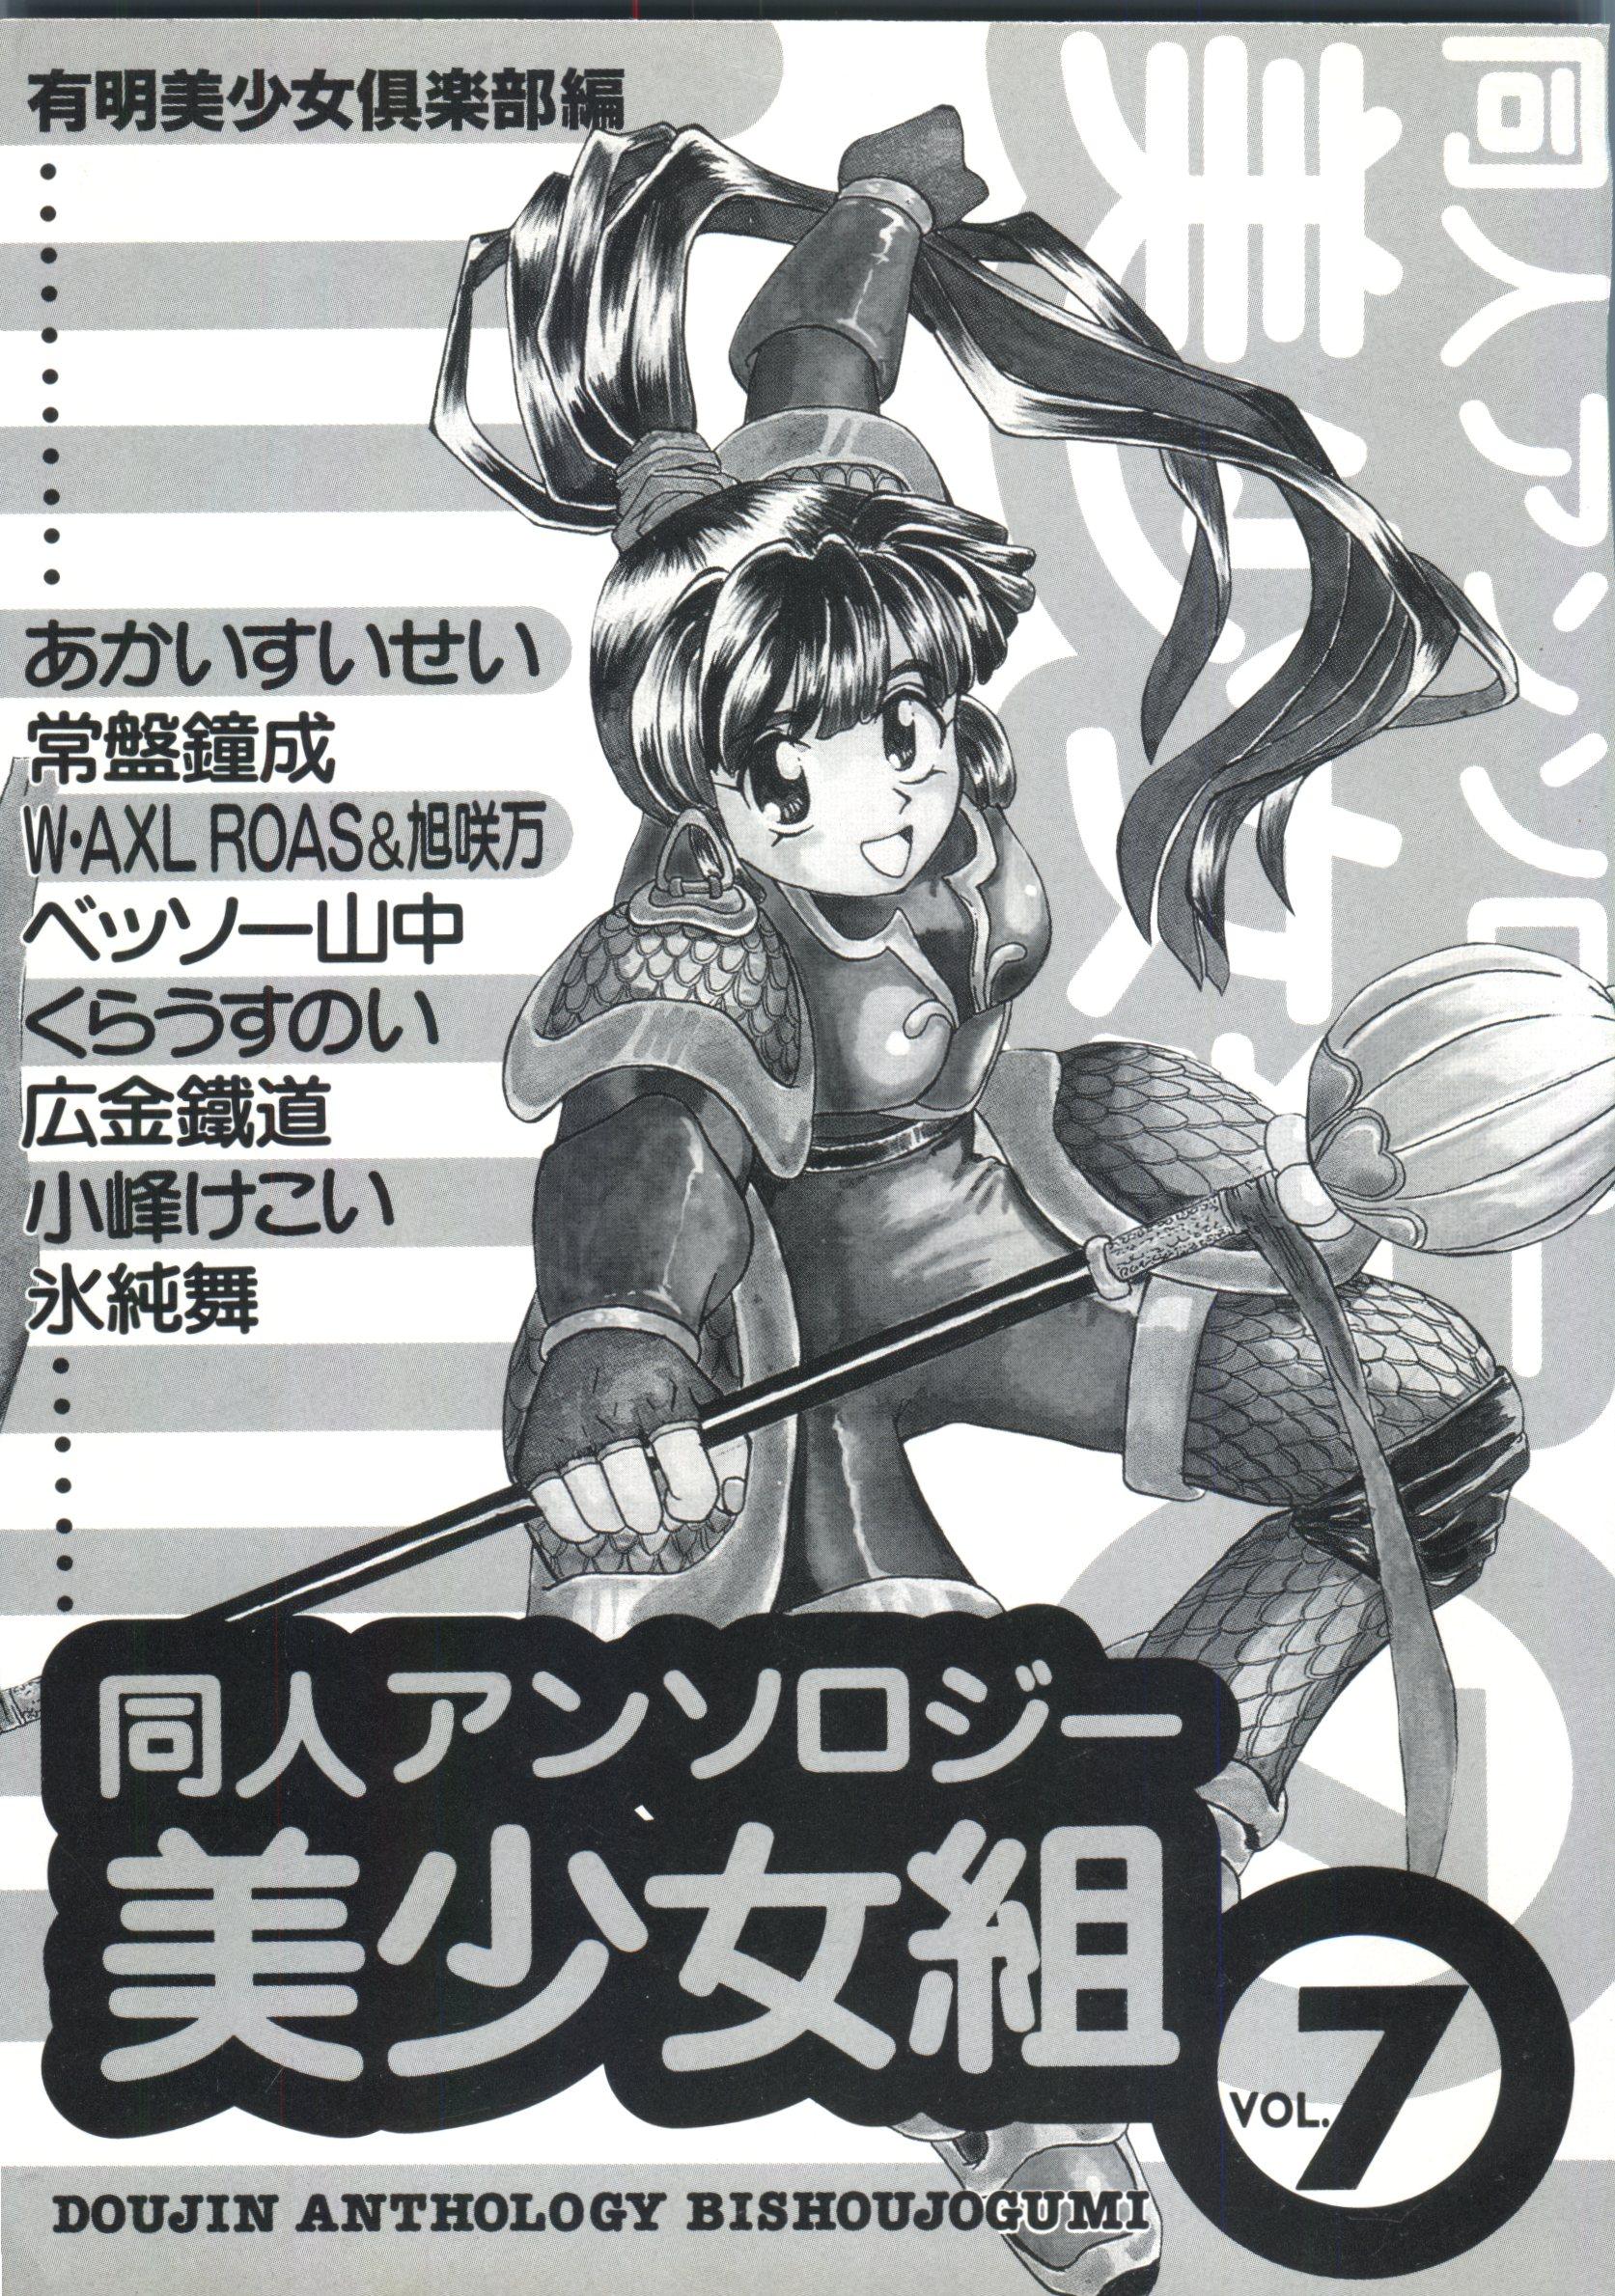 Black Girl Doujin Anthology Bishoujo Gumi 7 - Neon genesis evangelion Sailor moon King of fighters Magic knight rayearth Saint tail Man - Page 4